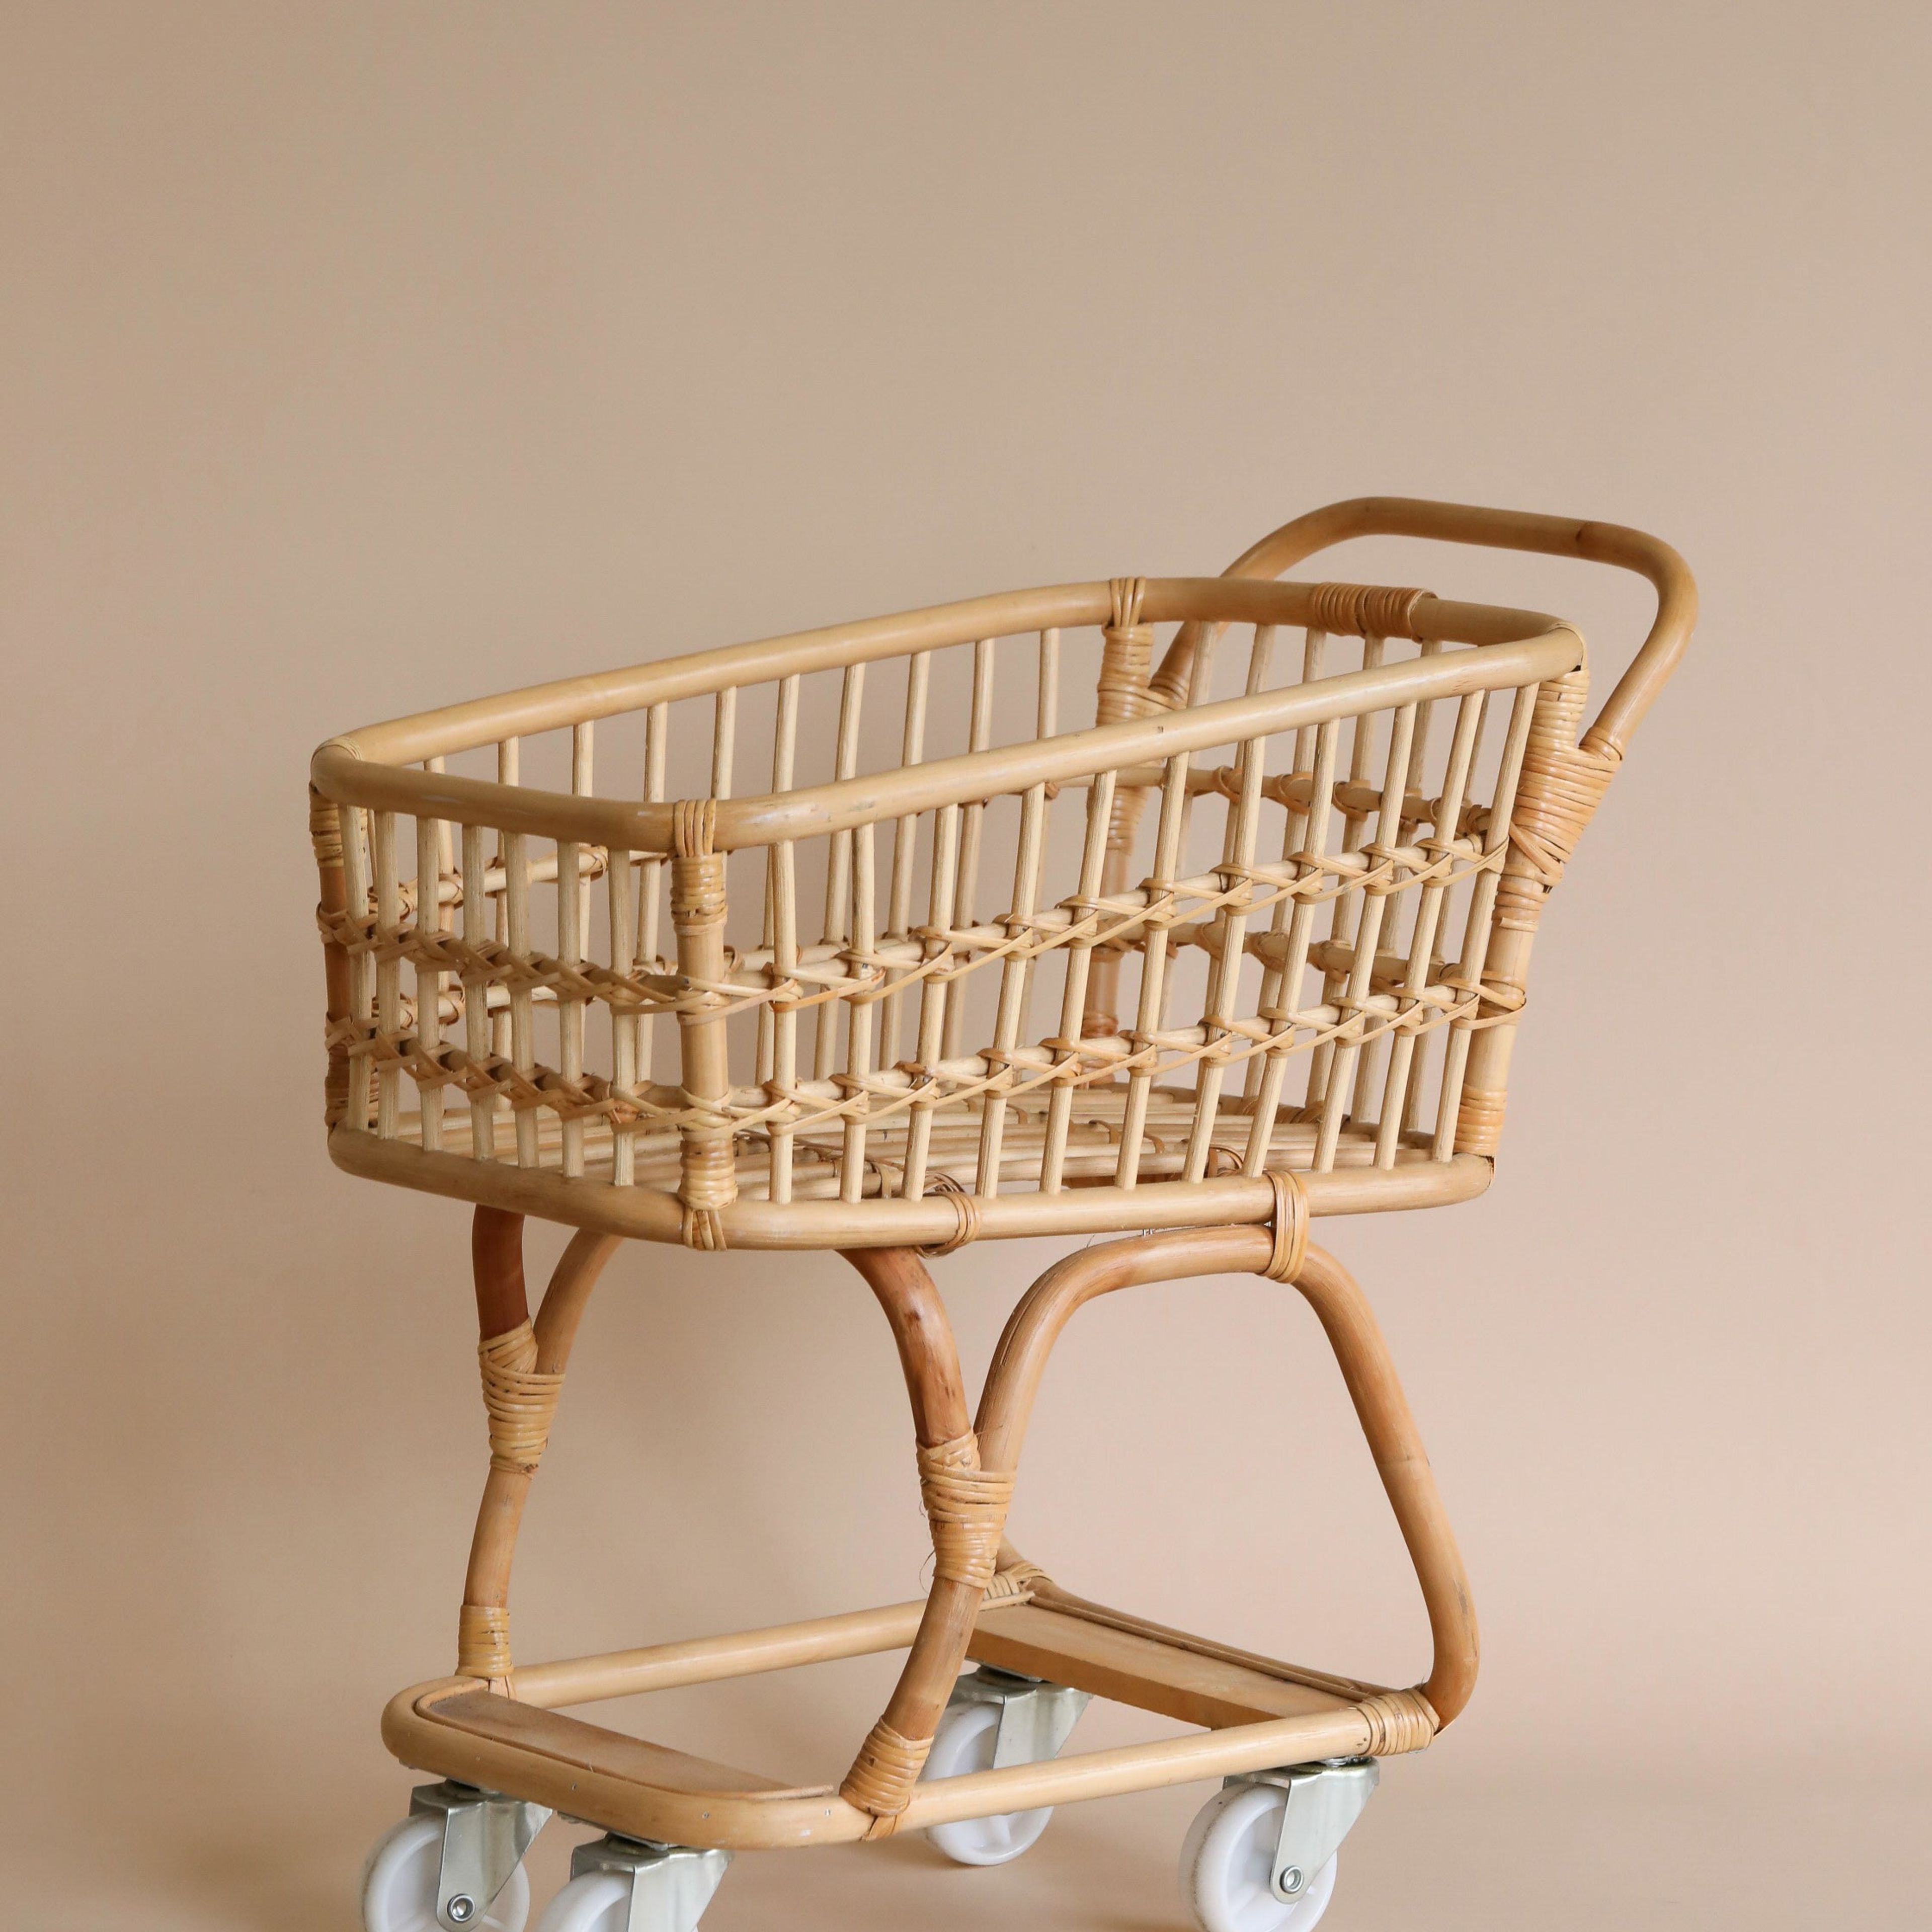 Rattan Grocery Shopping Cart